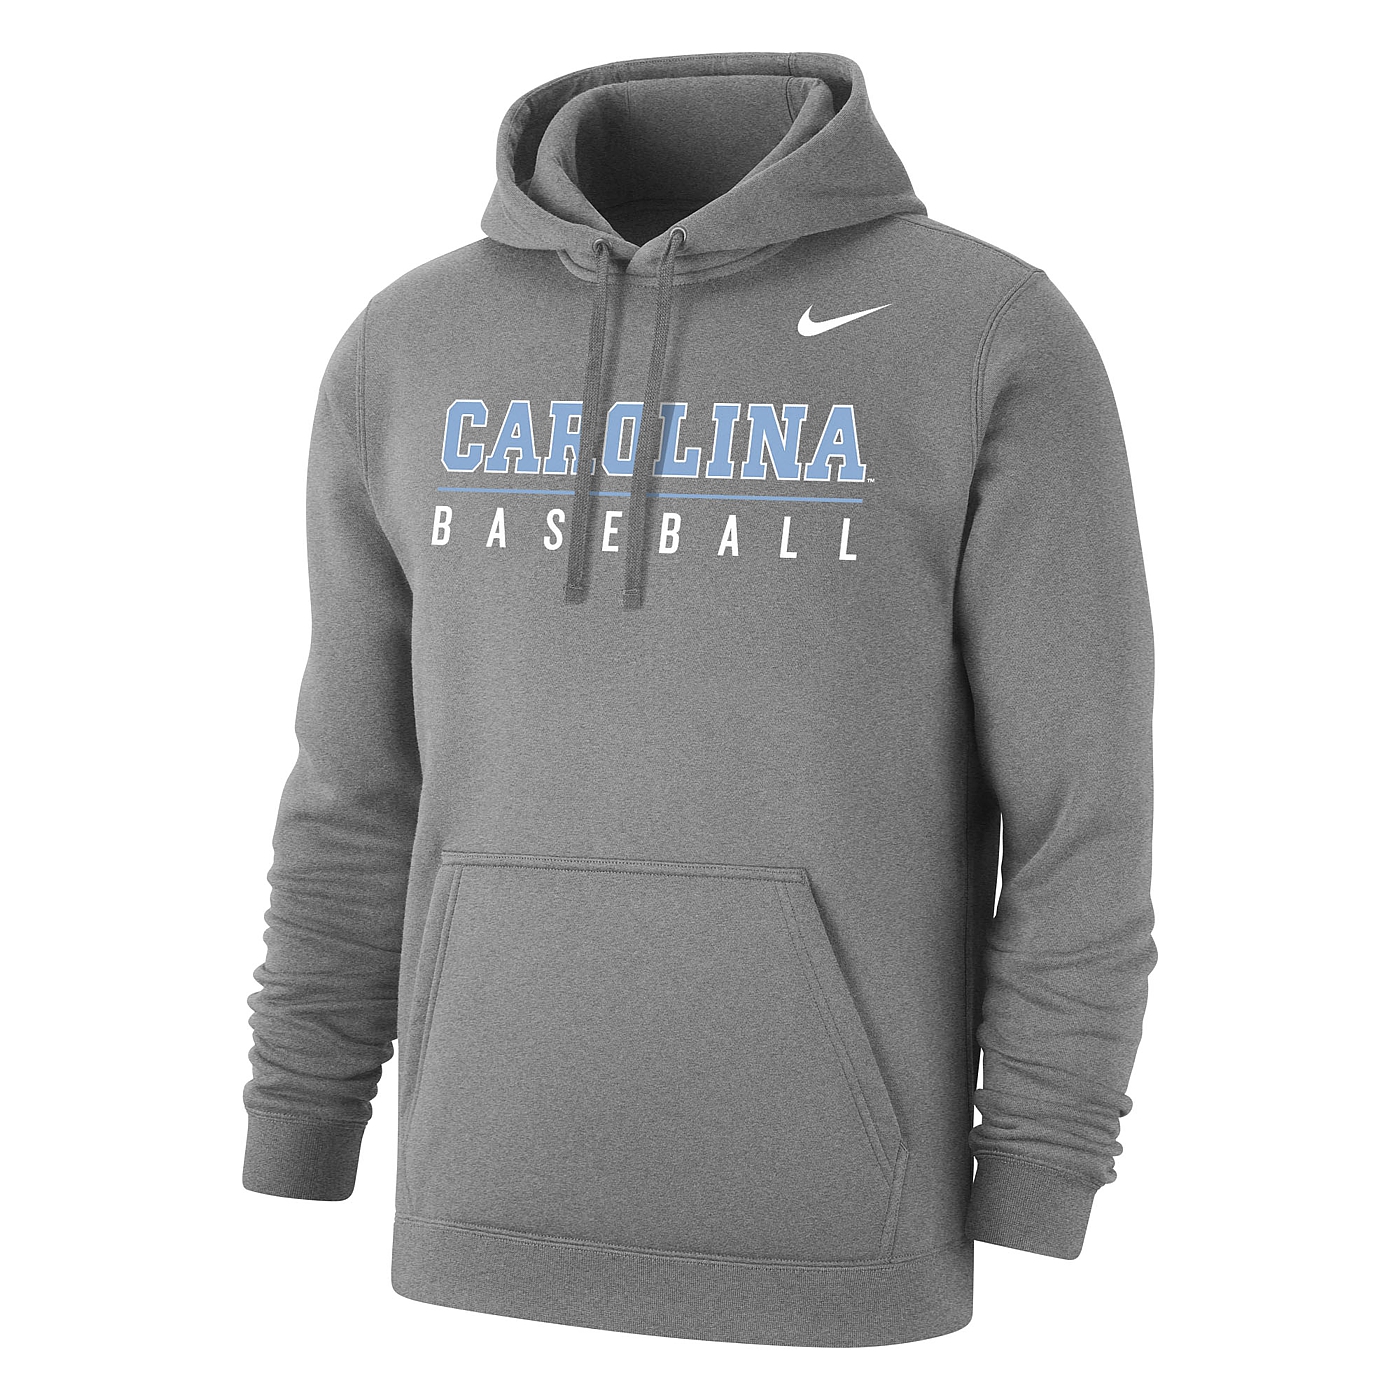 Johnny T-shirt - North Carolina Tar Heels - Nike Carolina Baseball Sport Club Hood by Nike